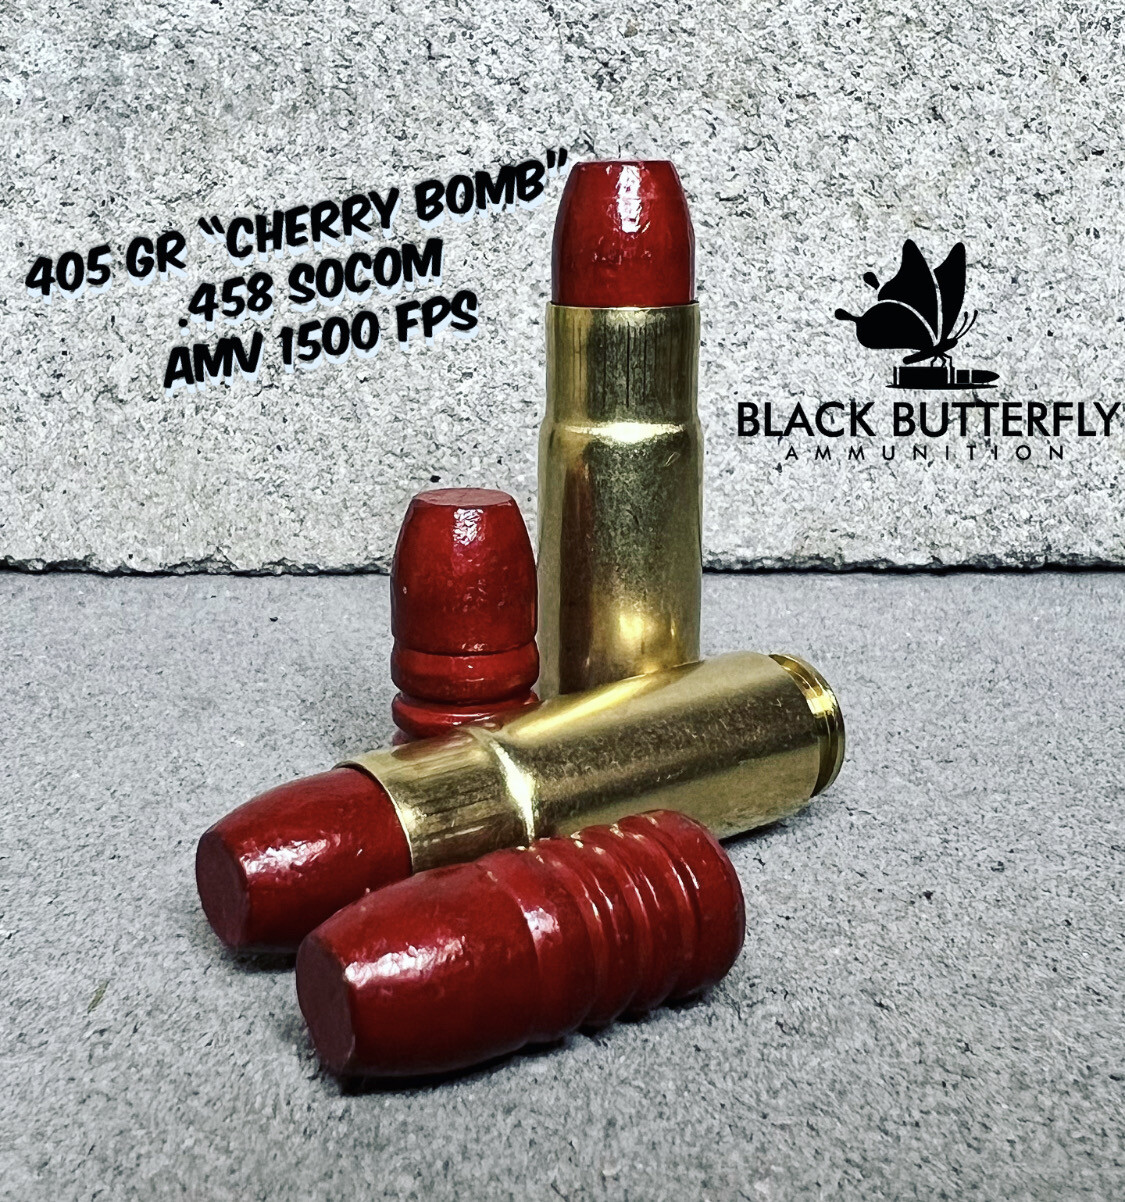 Black Butterfly Ammunition Target and Hunting, .458 SOCOM, 405 gr, 20 Rounds, Acme Hi-Tek Coated Lead Flat Head &quot;Cherry Bomb&quot;